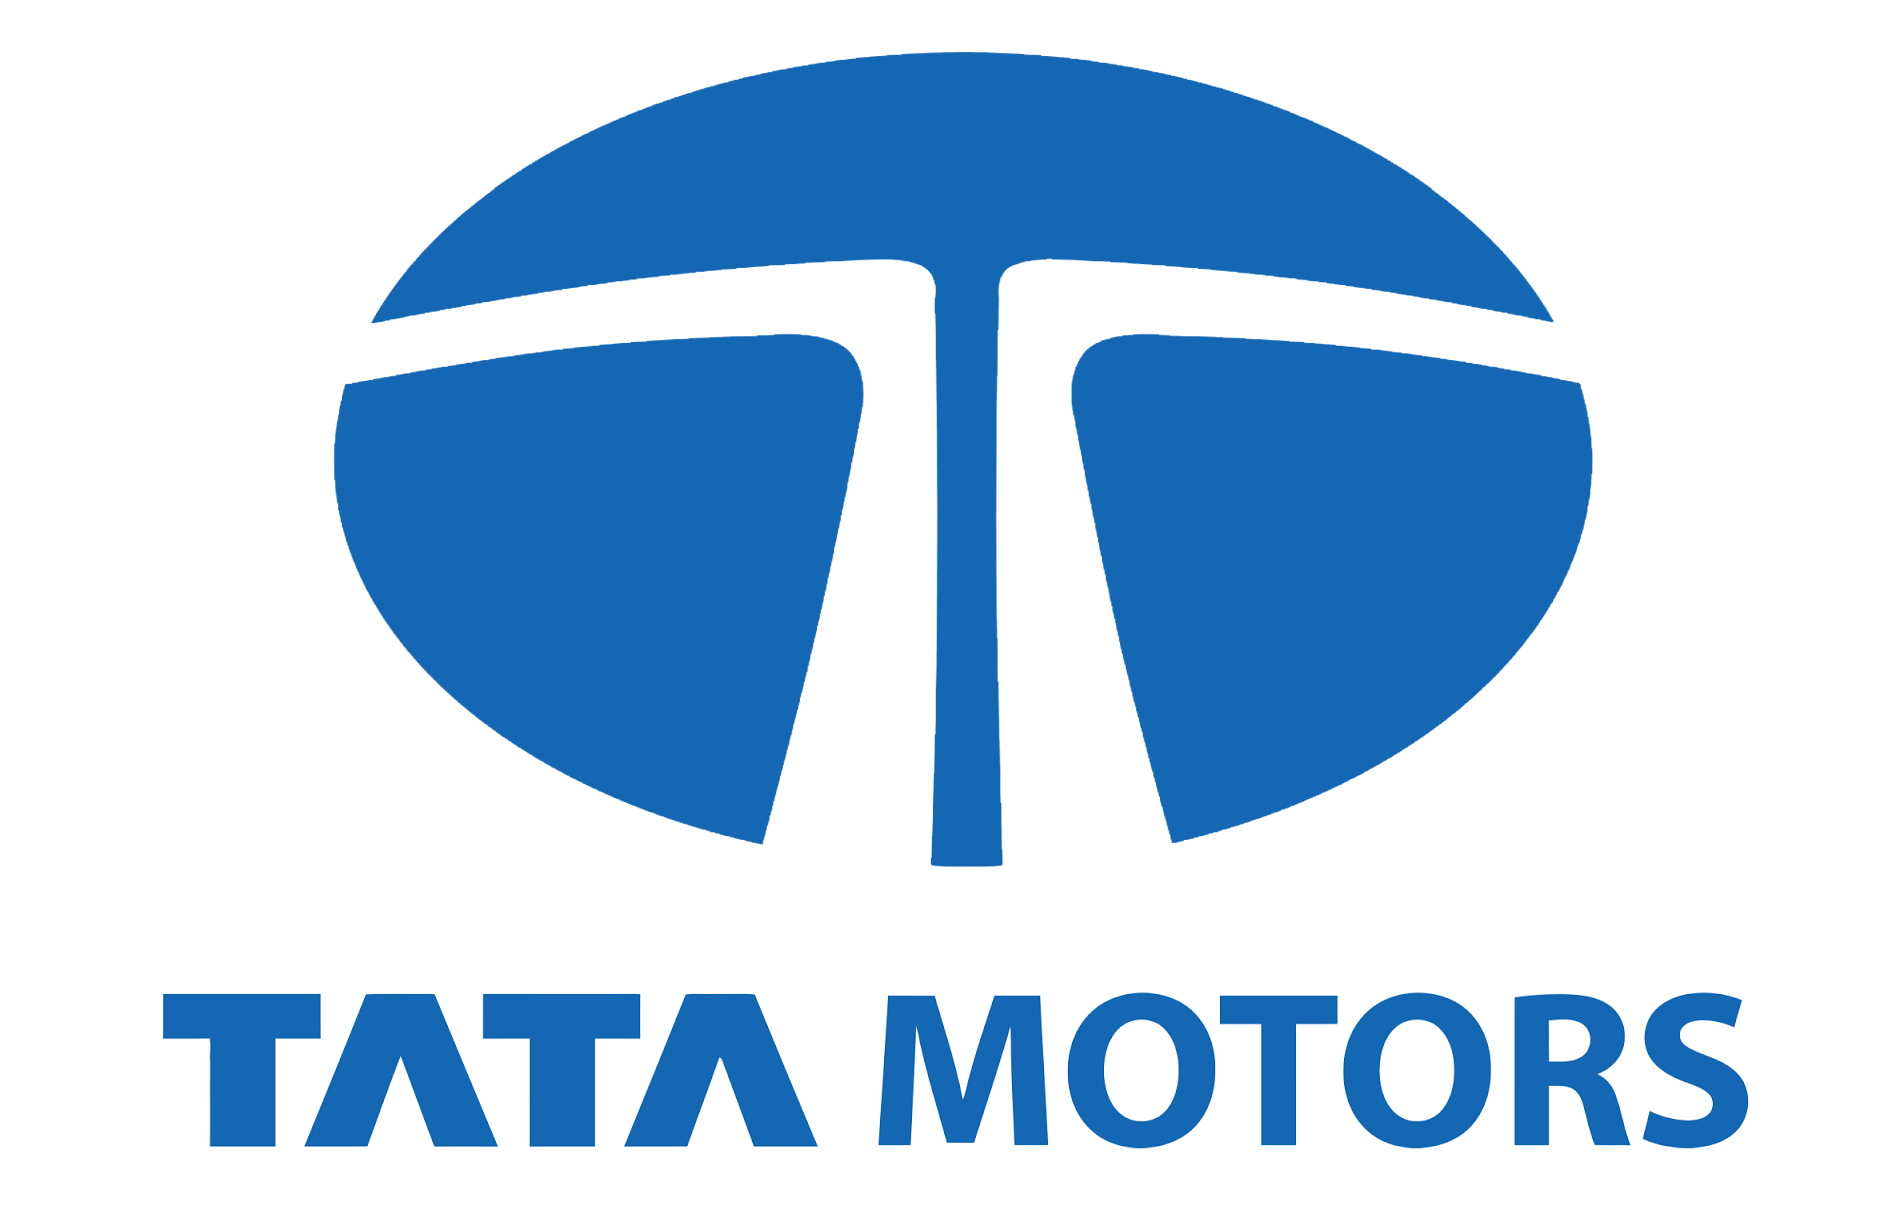 Heritage Motors (Tata Motors)|Show Room|Automotive